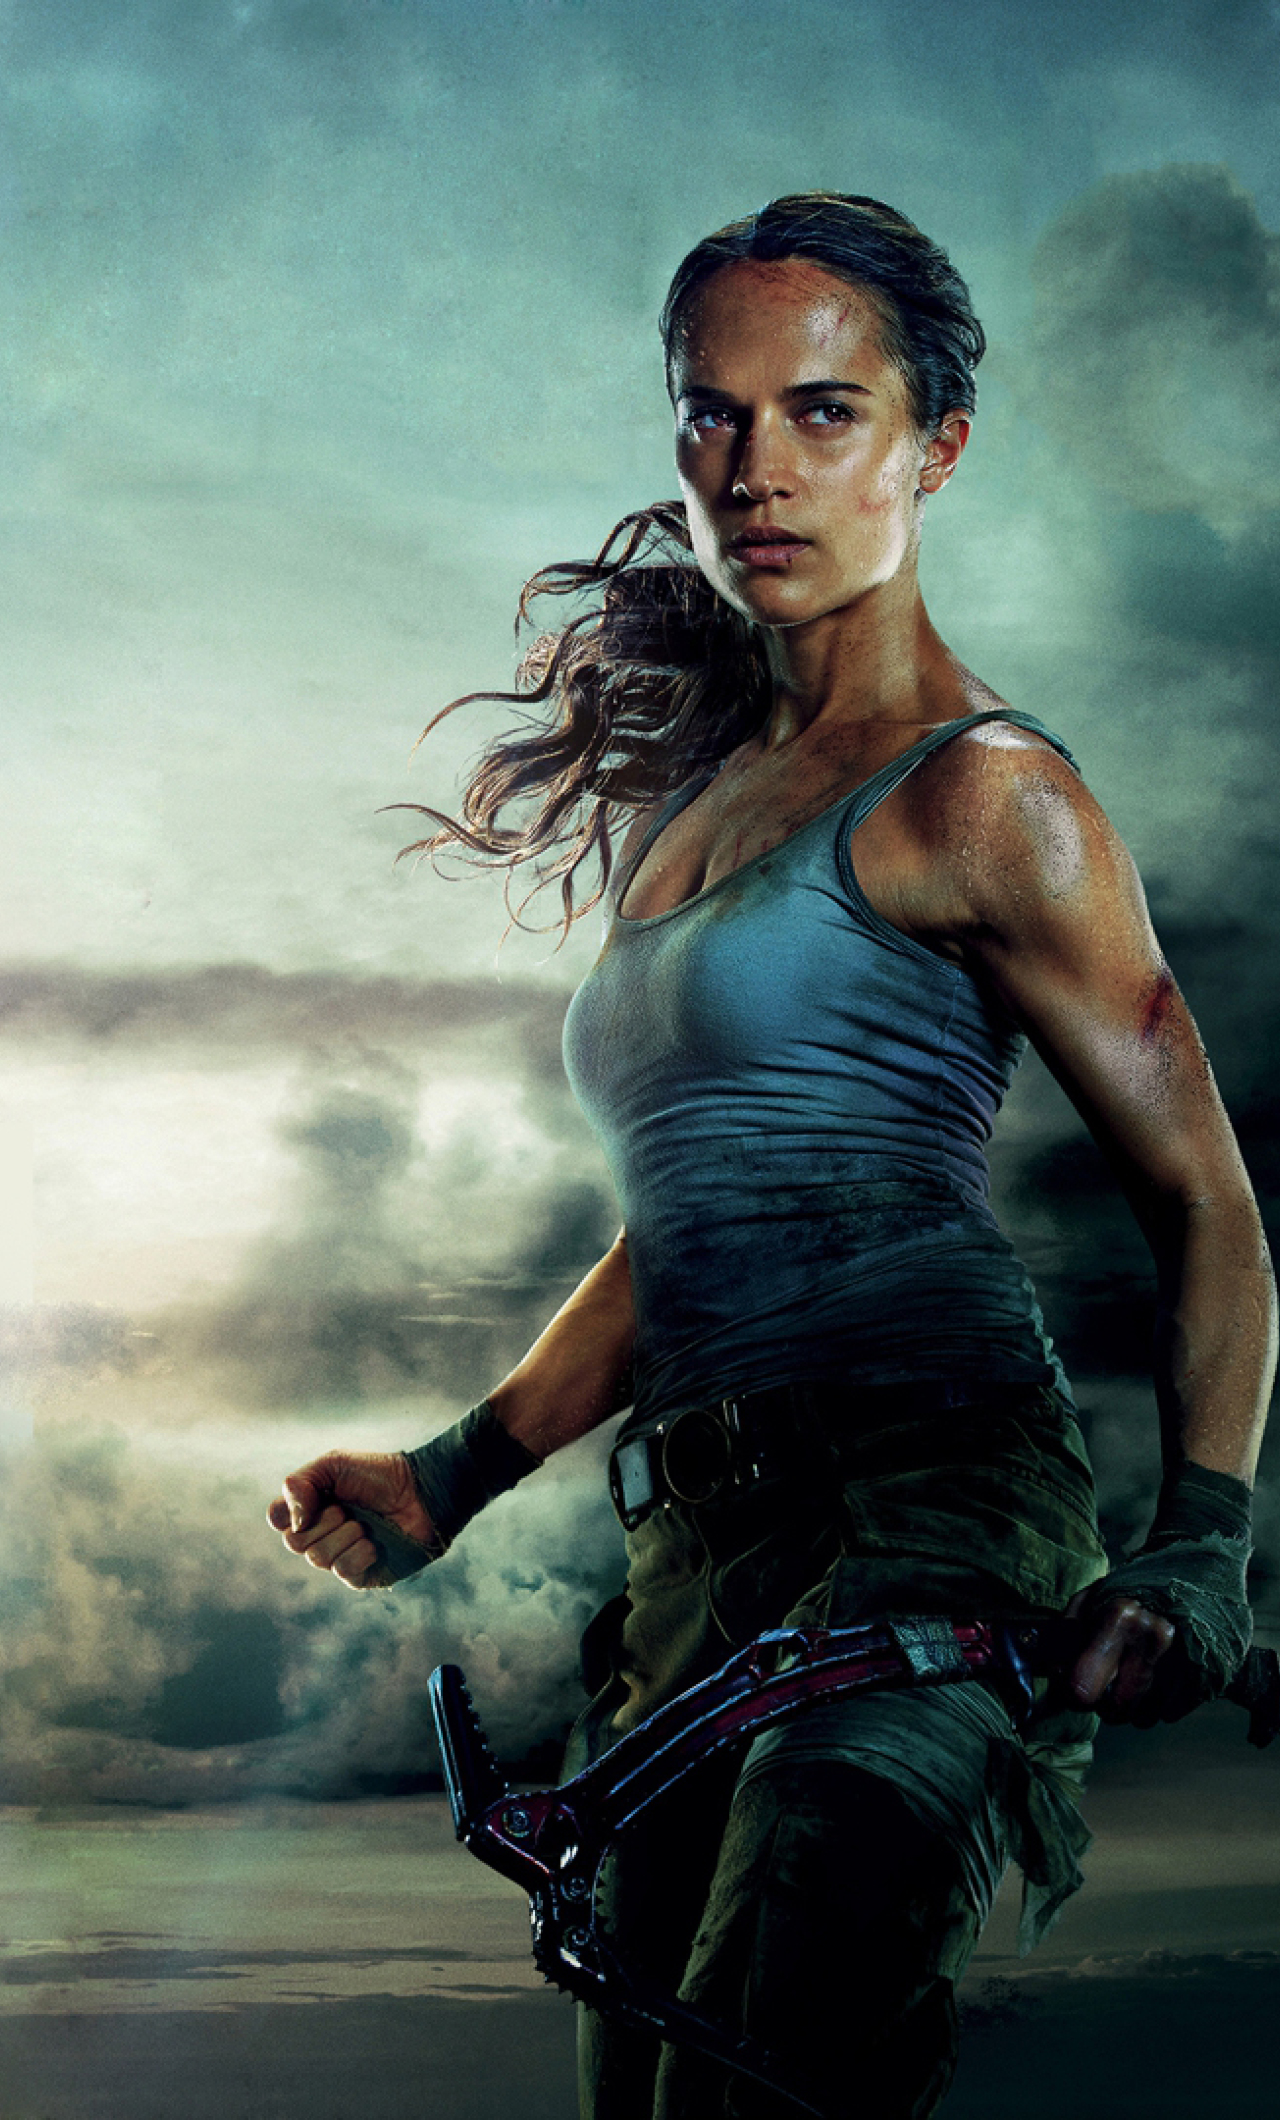 Alicia Vikander Tomb Raider Movie